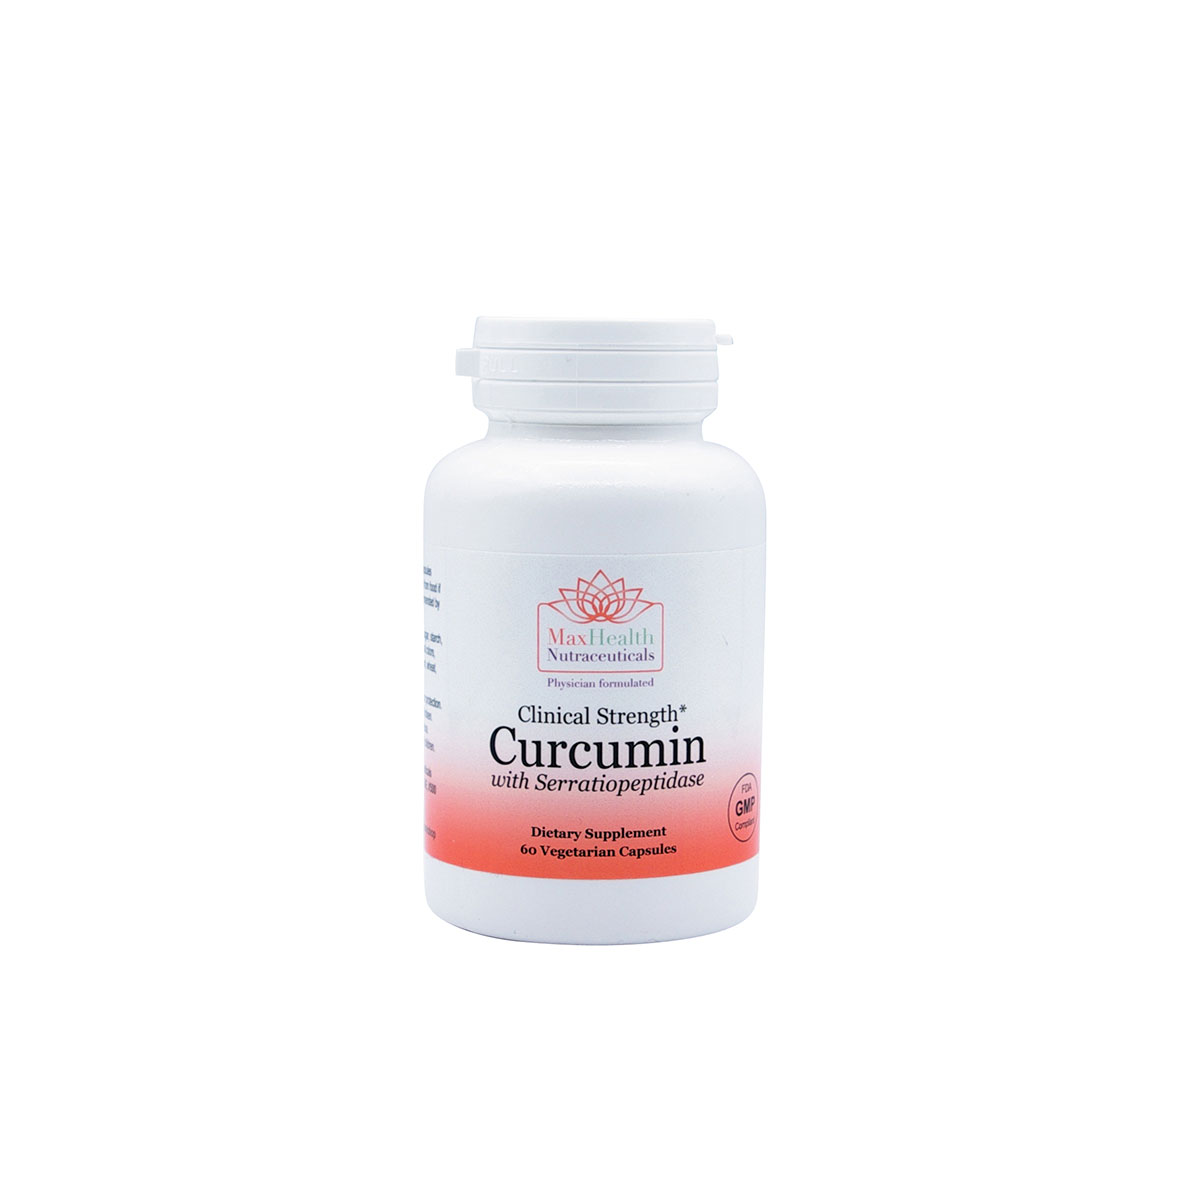 11Clinical Strength Curcumin with Serratiopeptidase